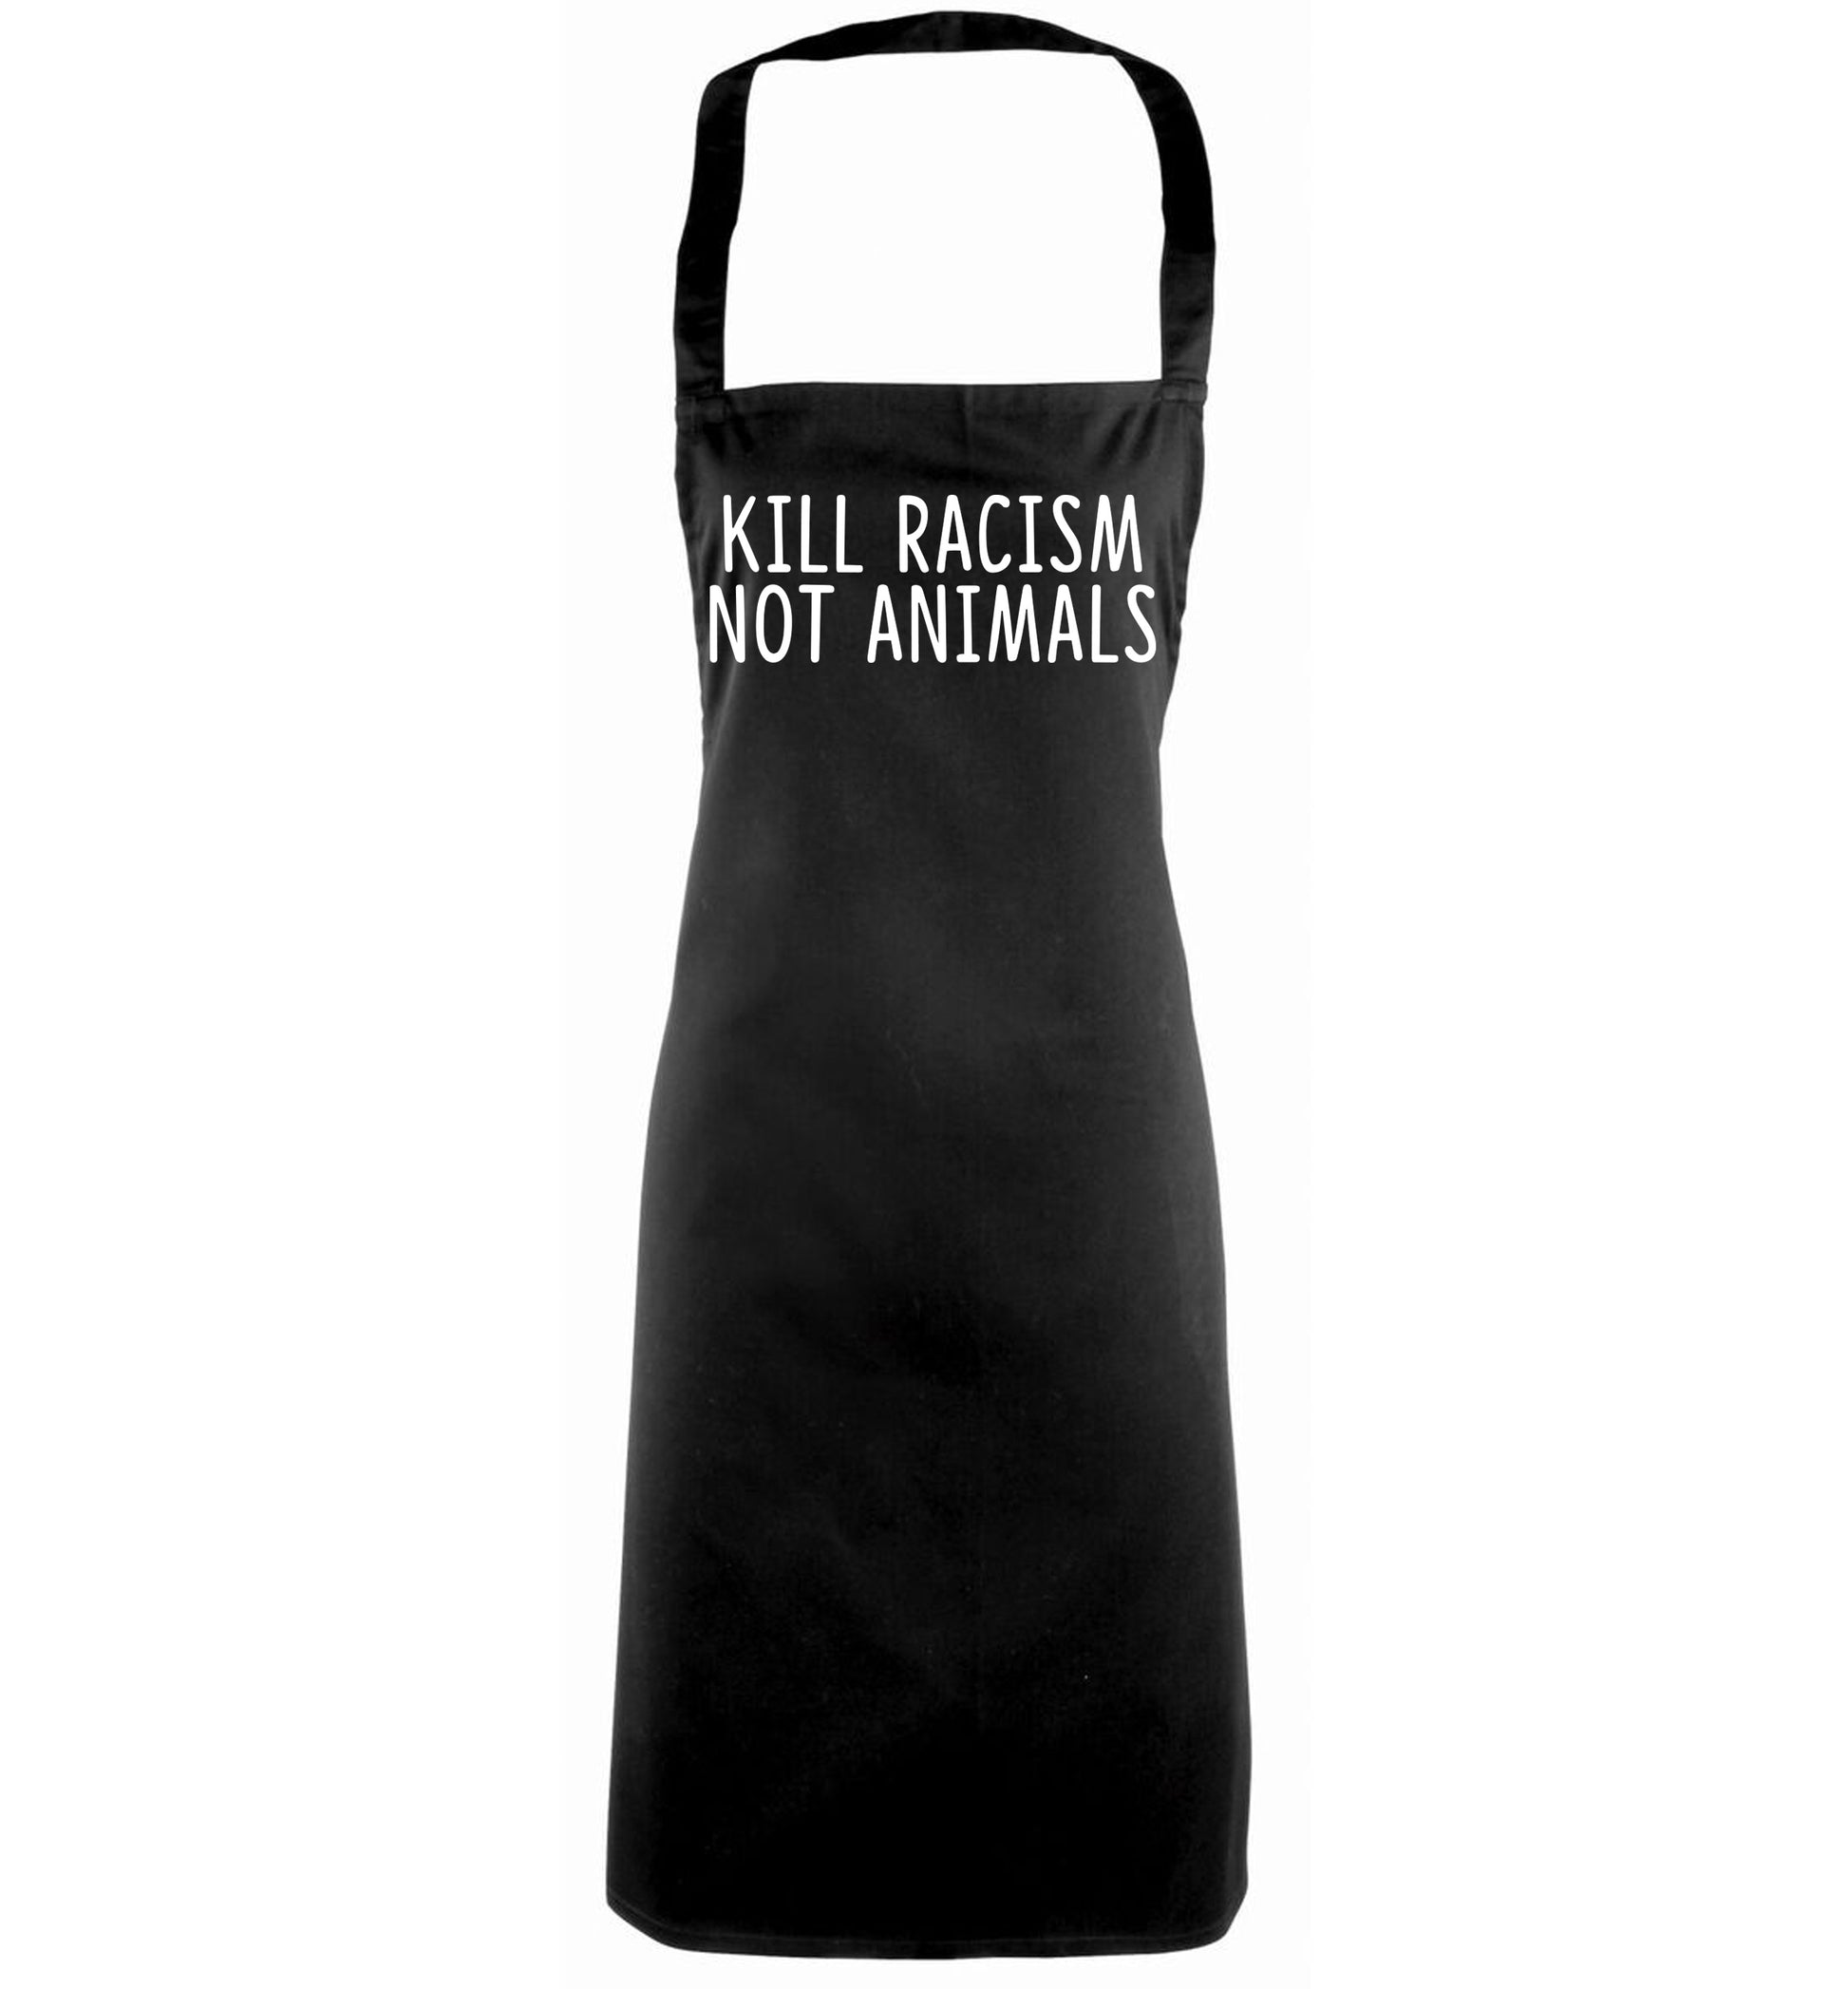 Kill Racism Not Animals black apron